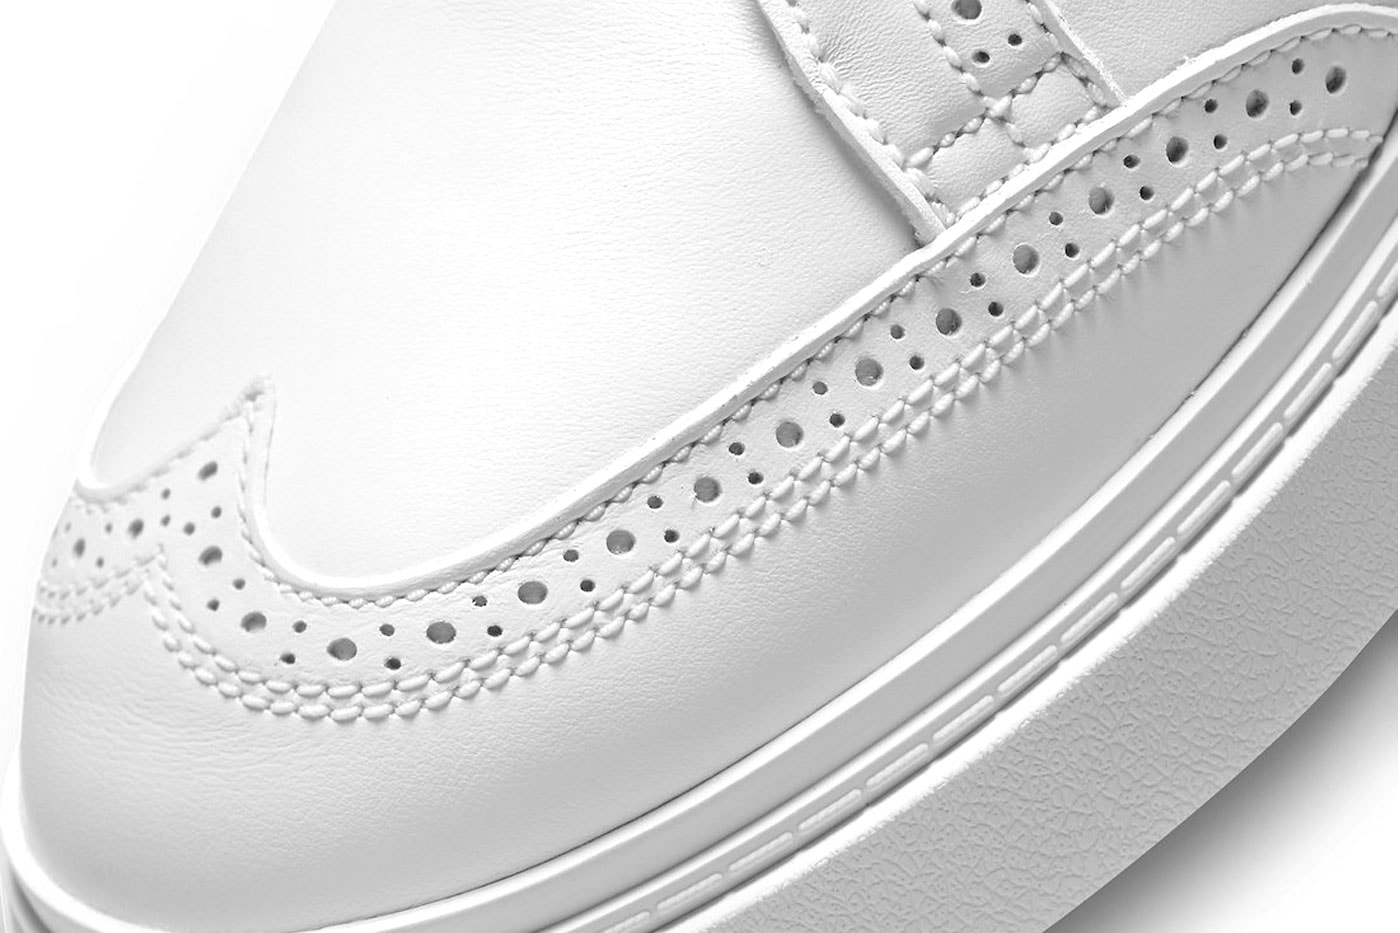 PEACEMINUSONE x Nike Kwondo 1 聯乘鞋款補貨情報正式公開